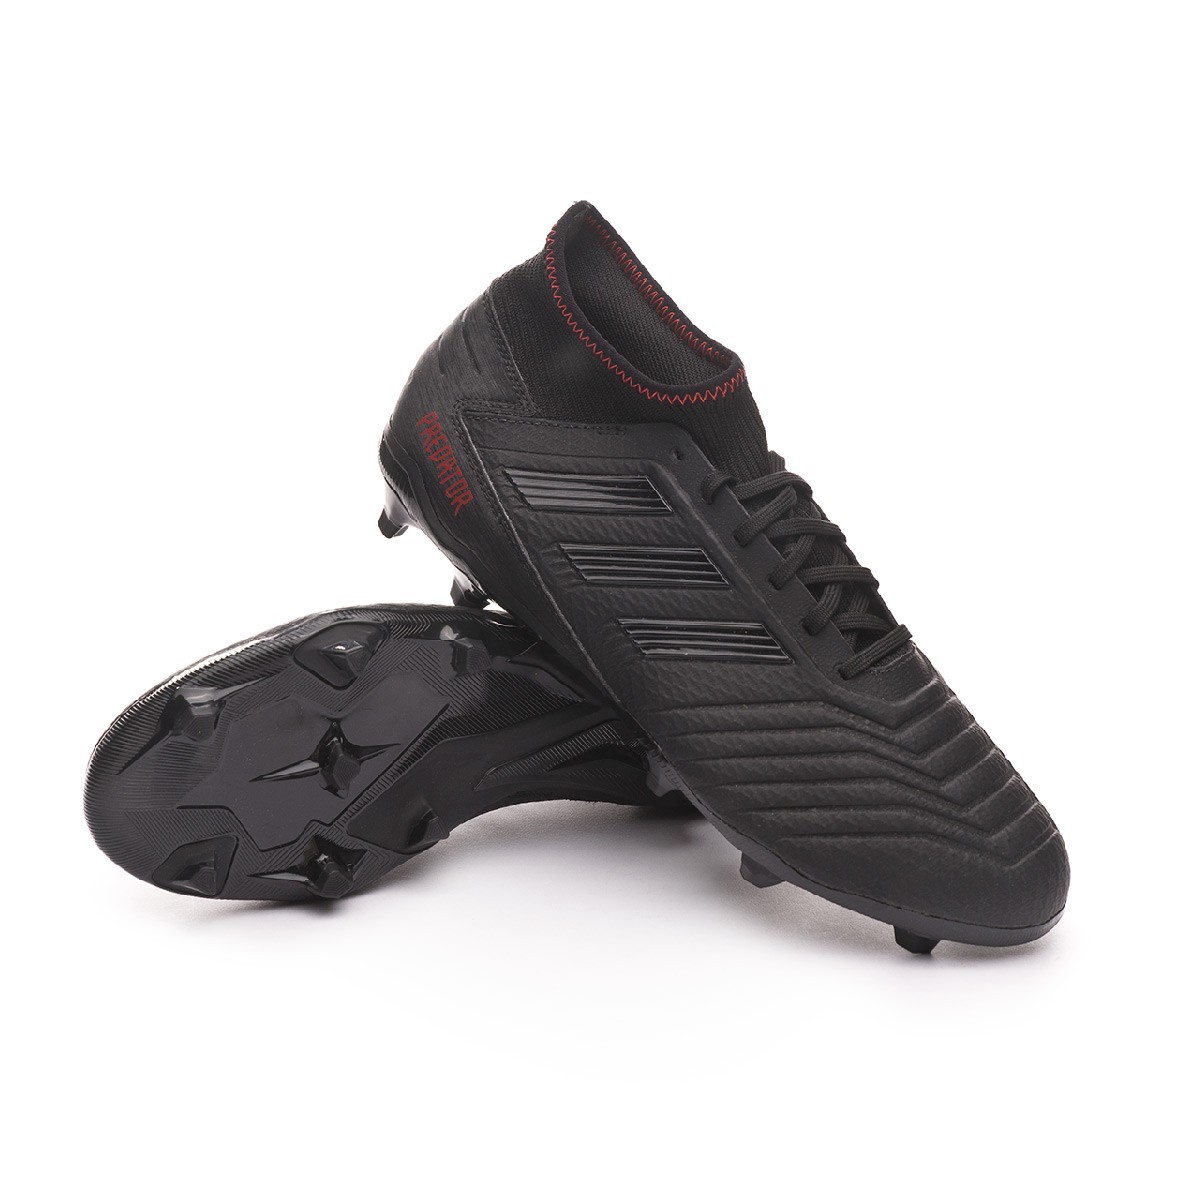 adidas predator 19.3 black and red